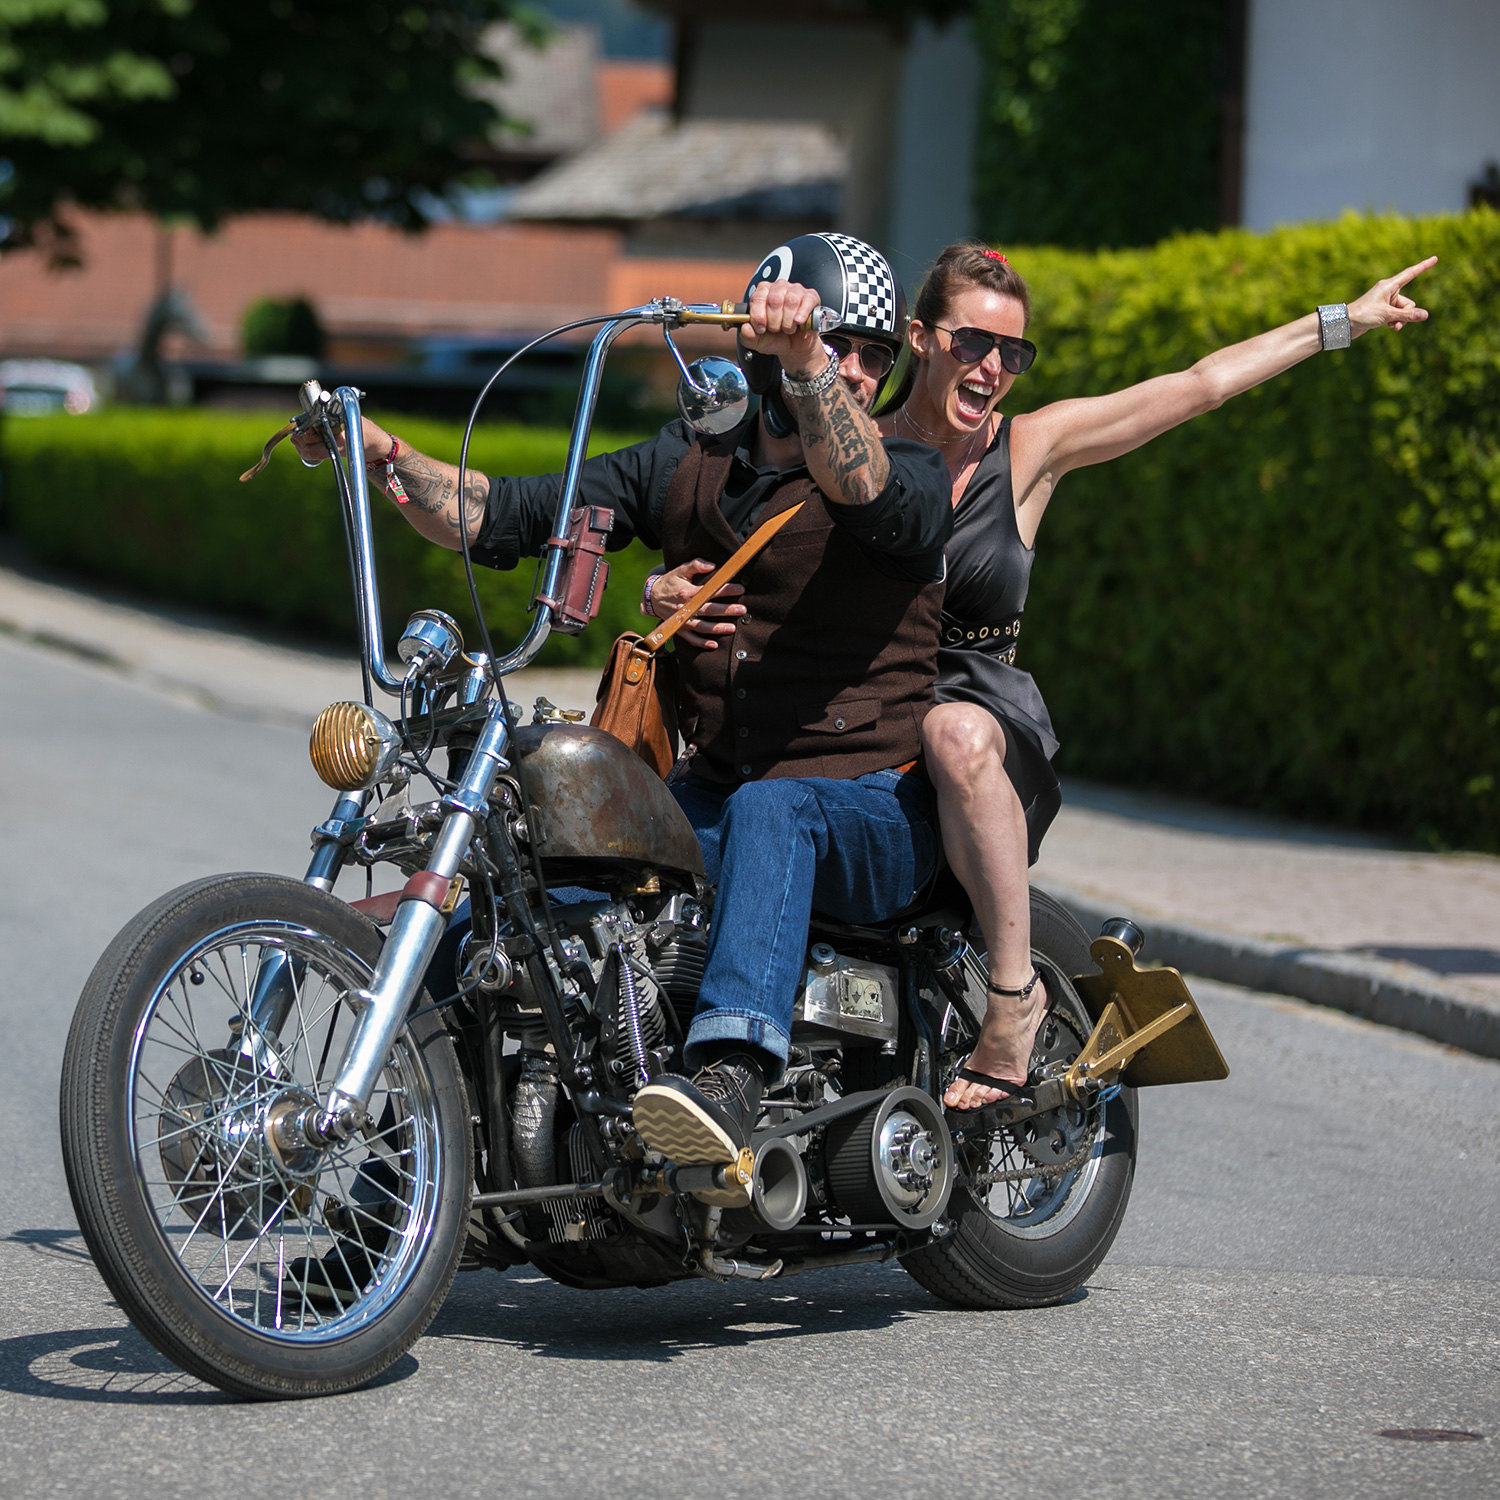 rock n roll bride riding motorcycle